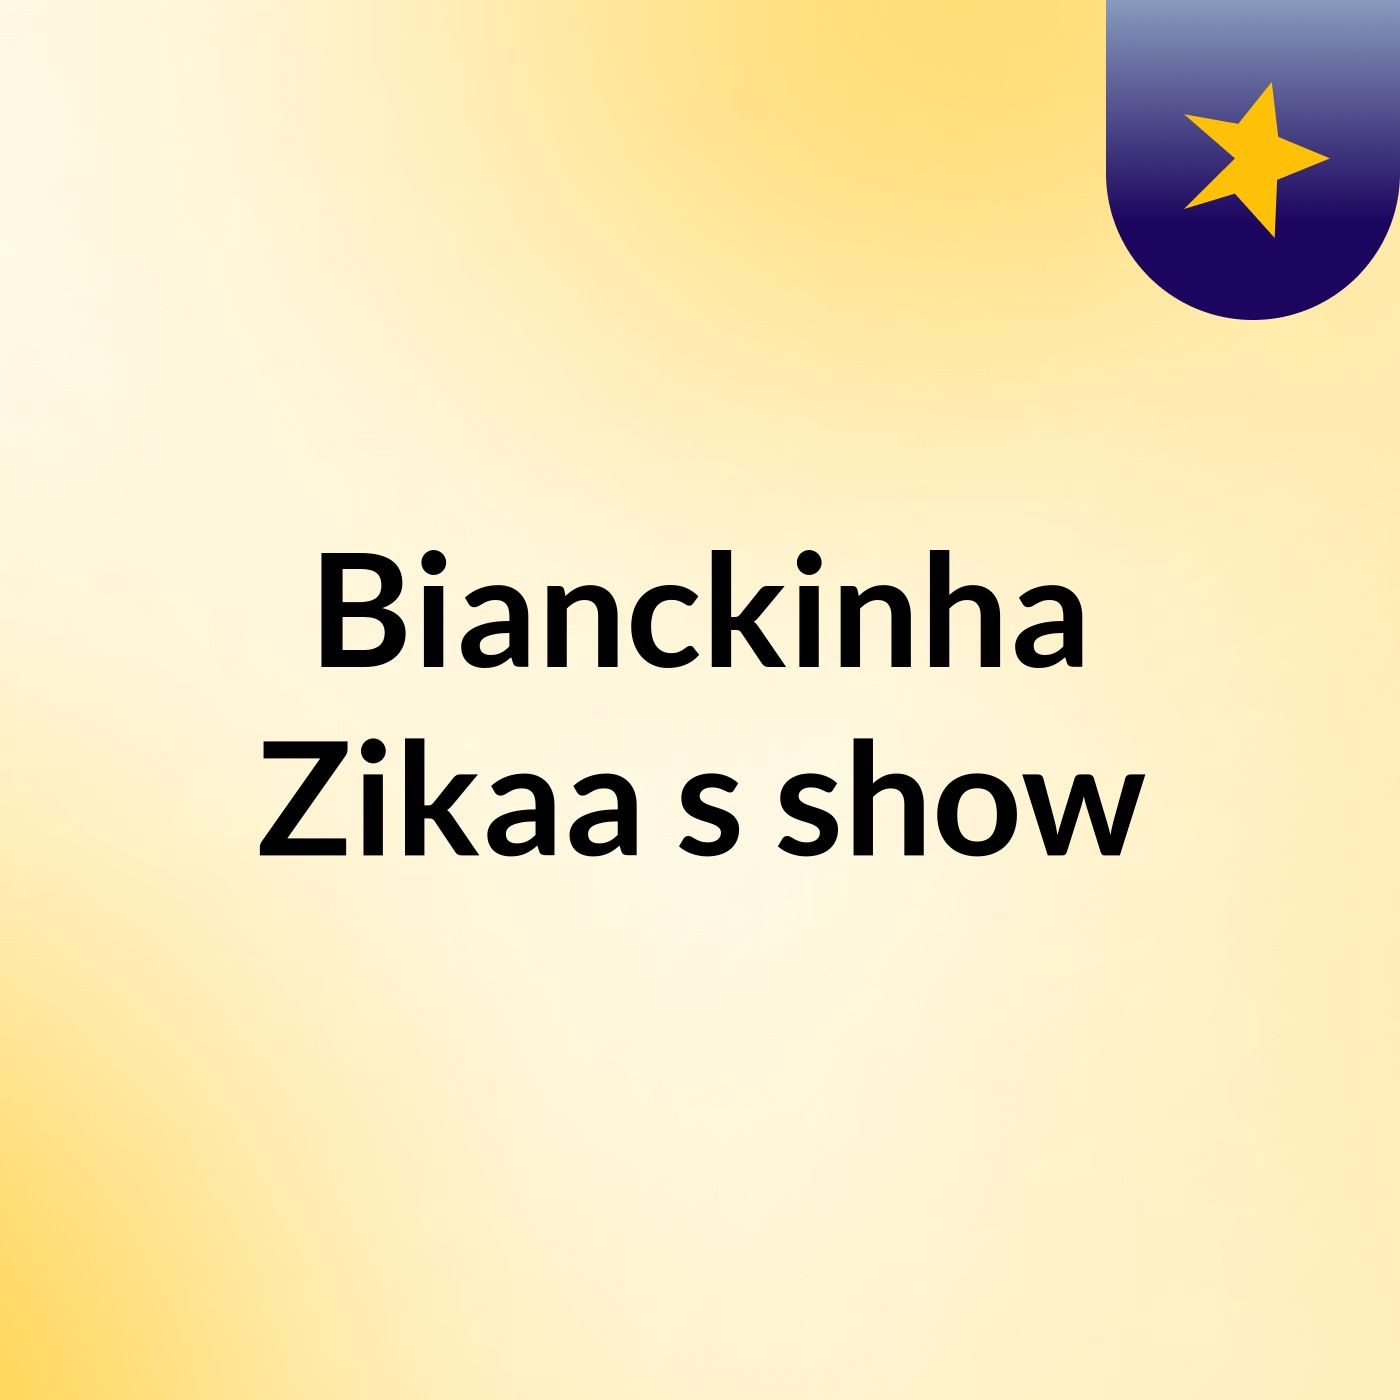 Bianckinha Zikaa's show